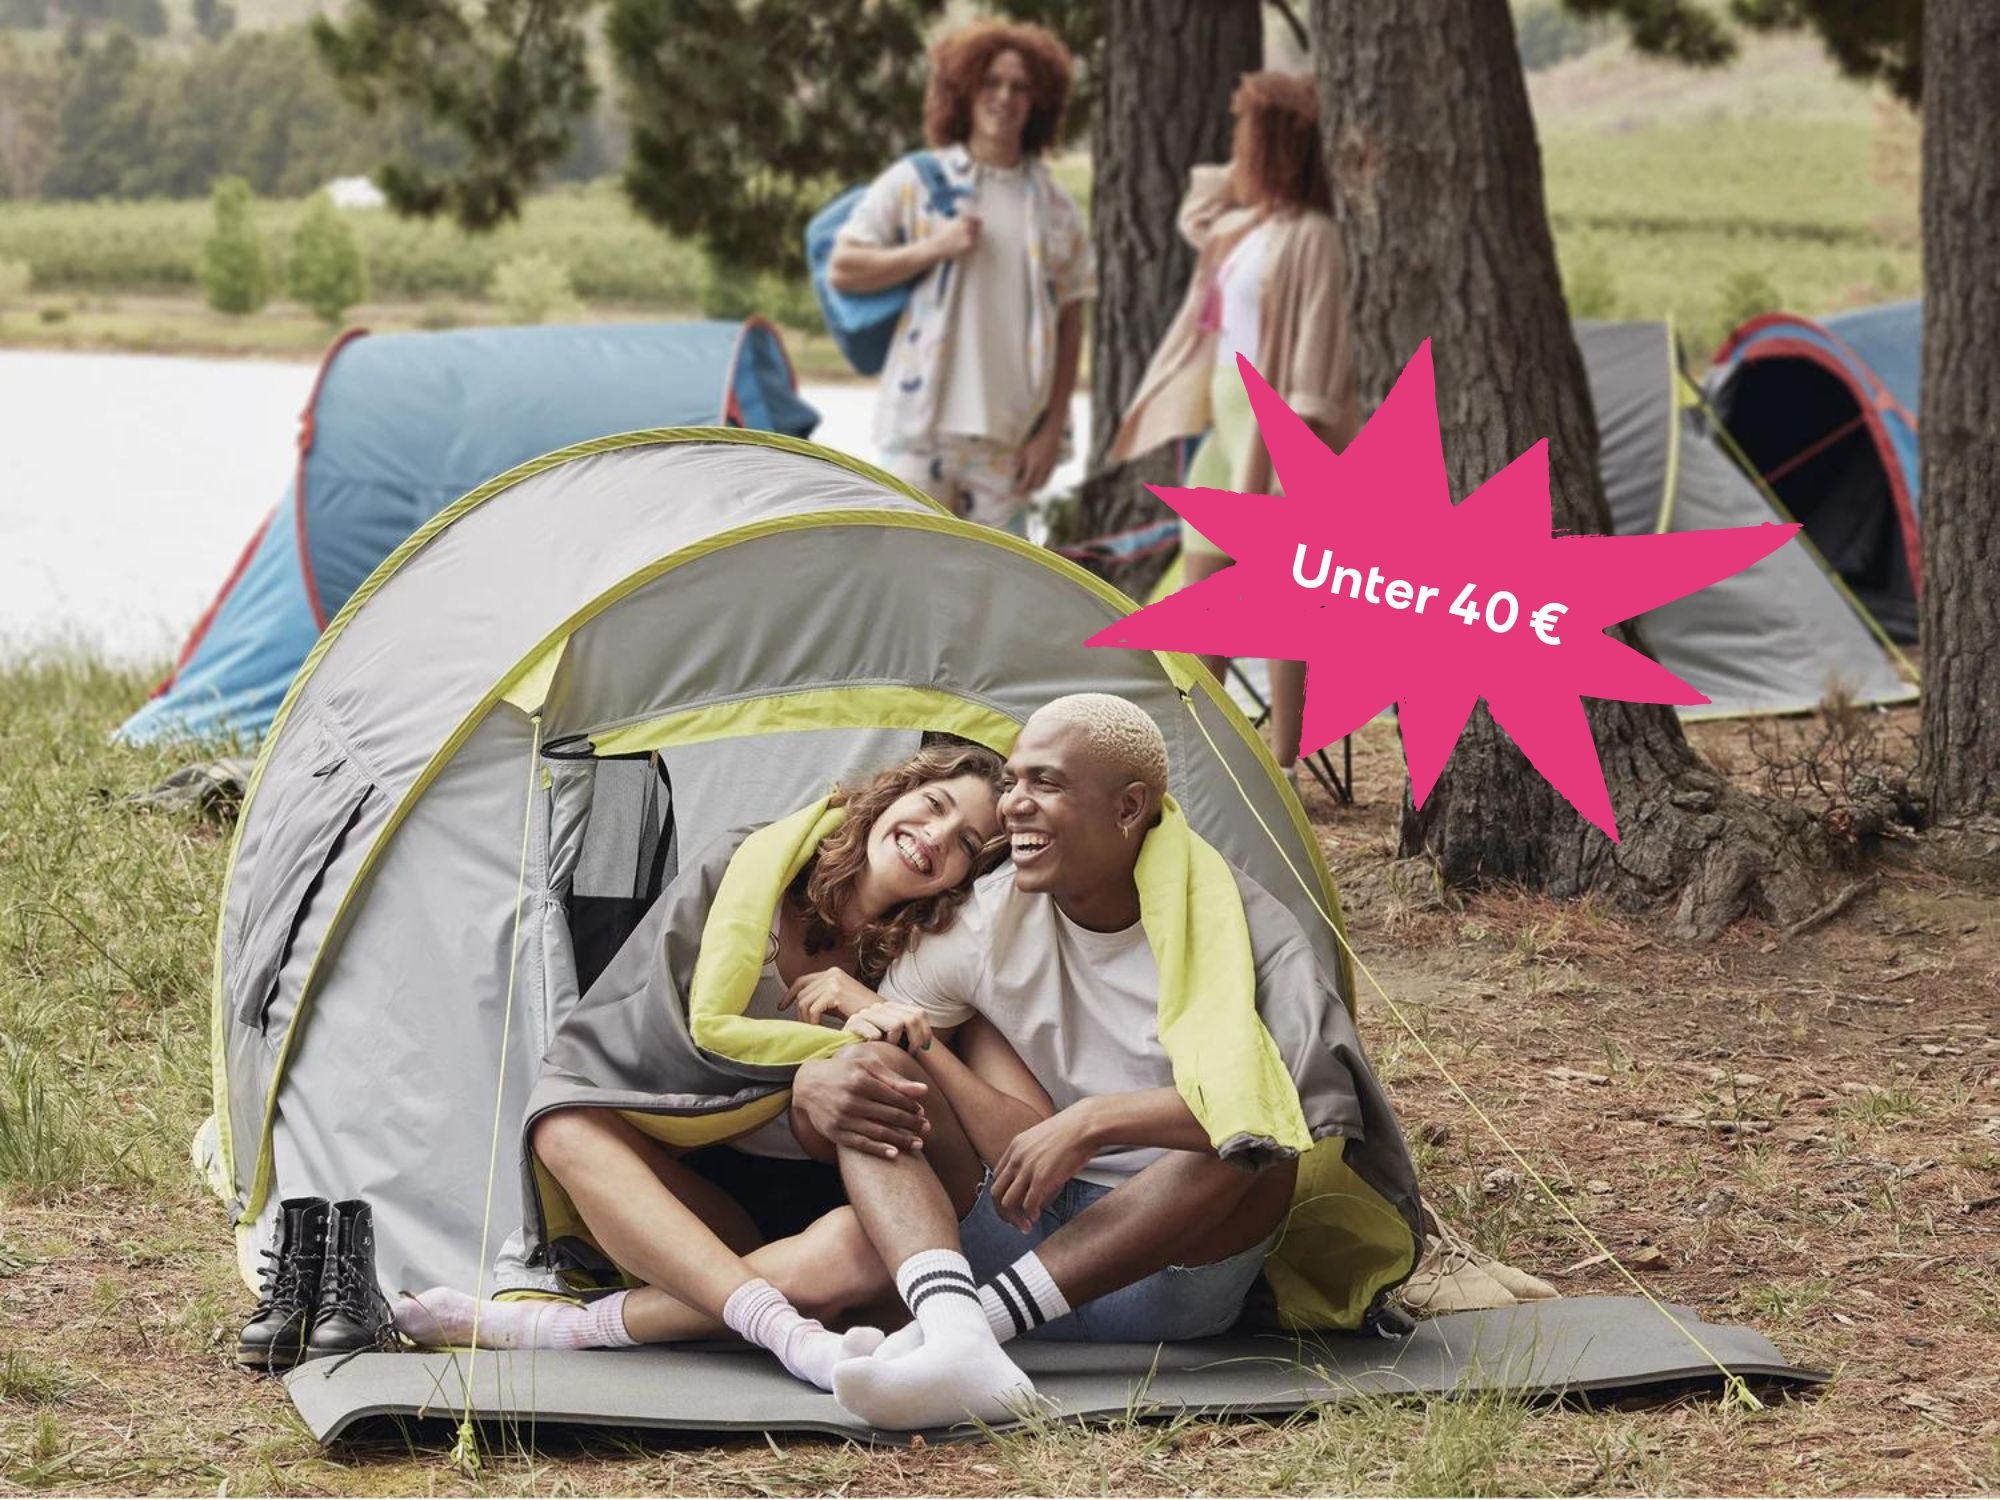 #In Sekunden aufgebaut: Lidl verkauft Pop-up-Campingzelt super günstig